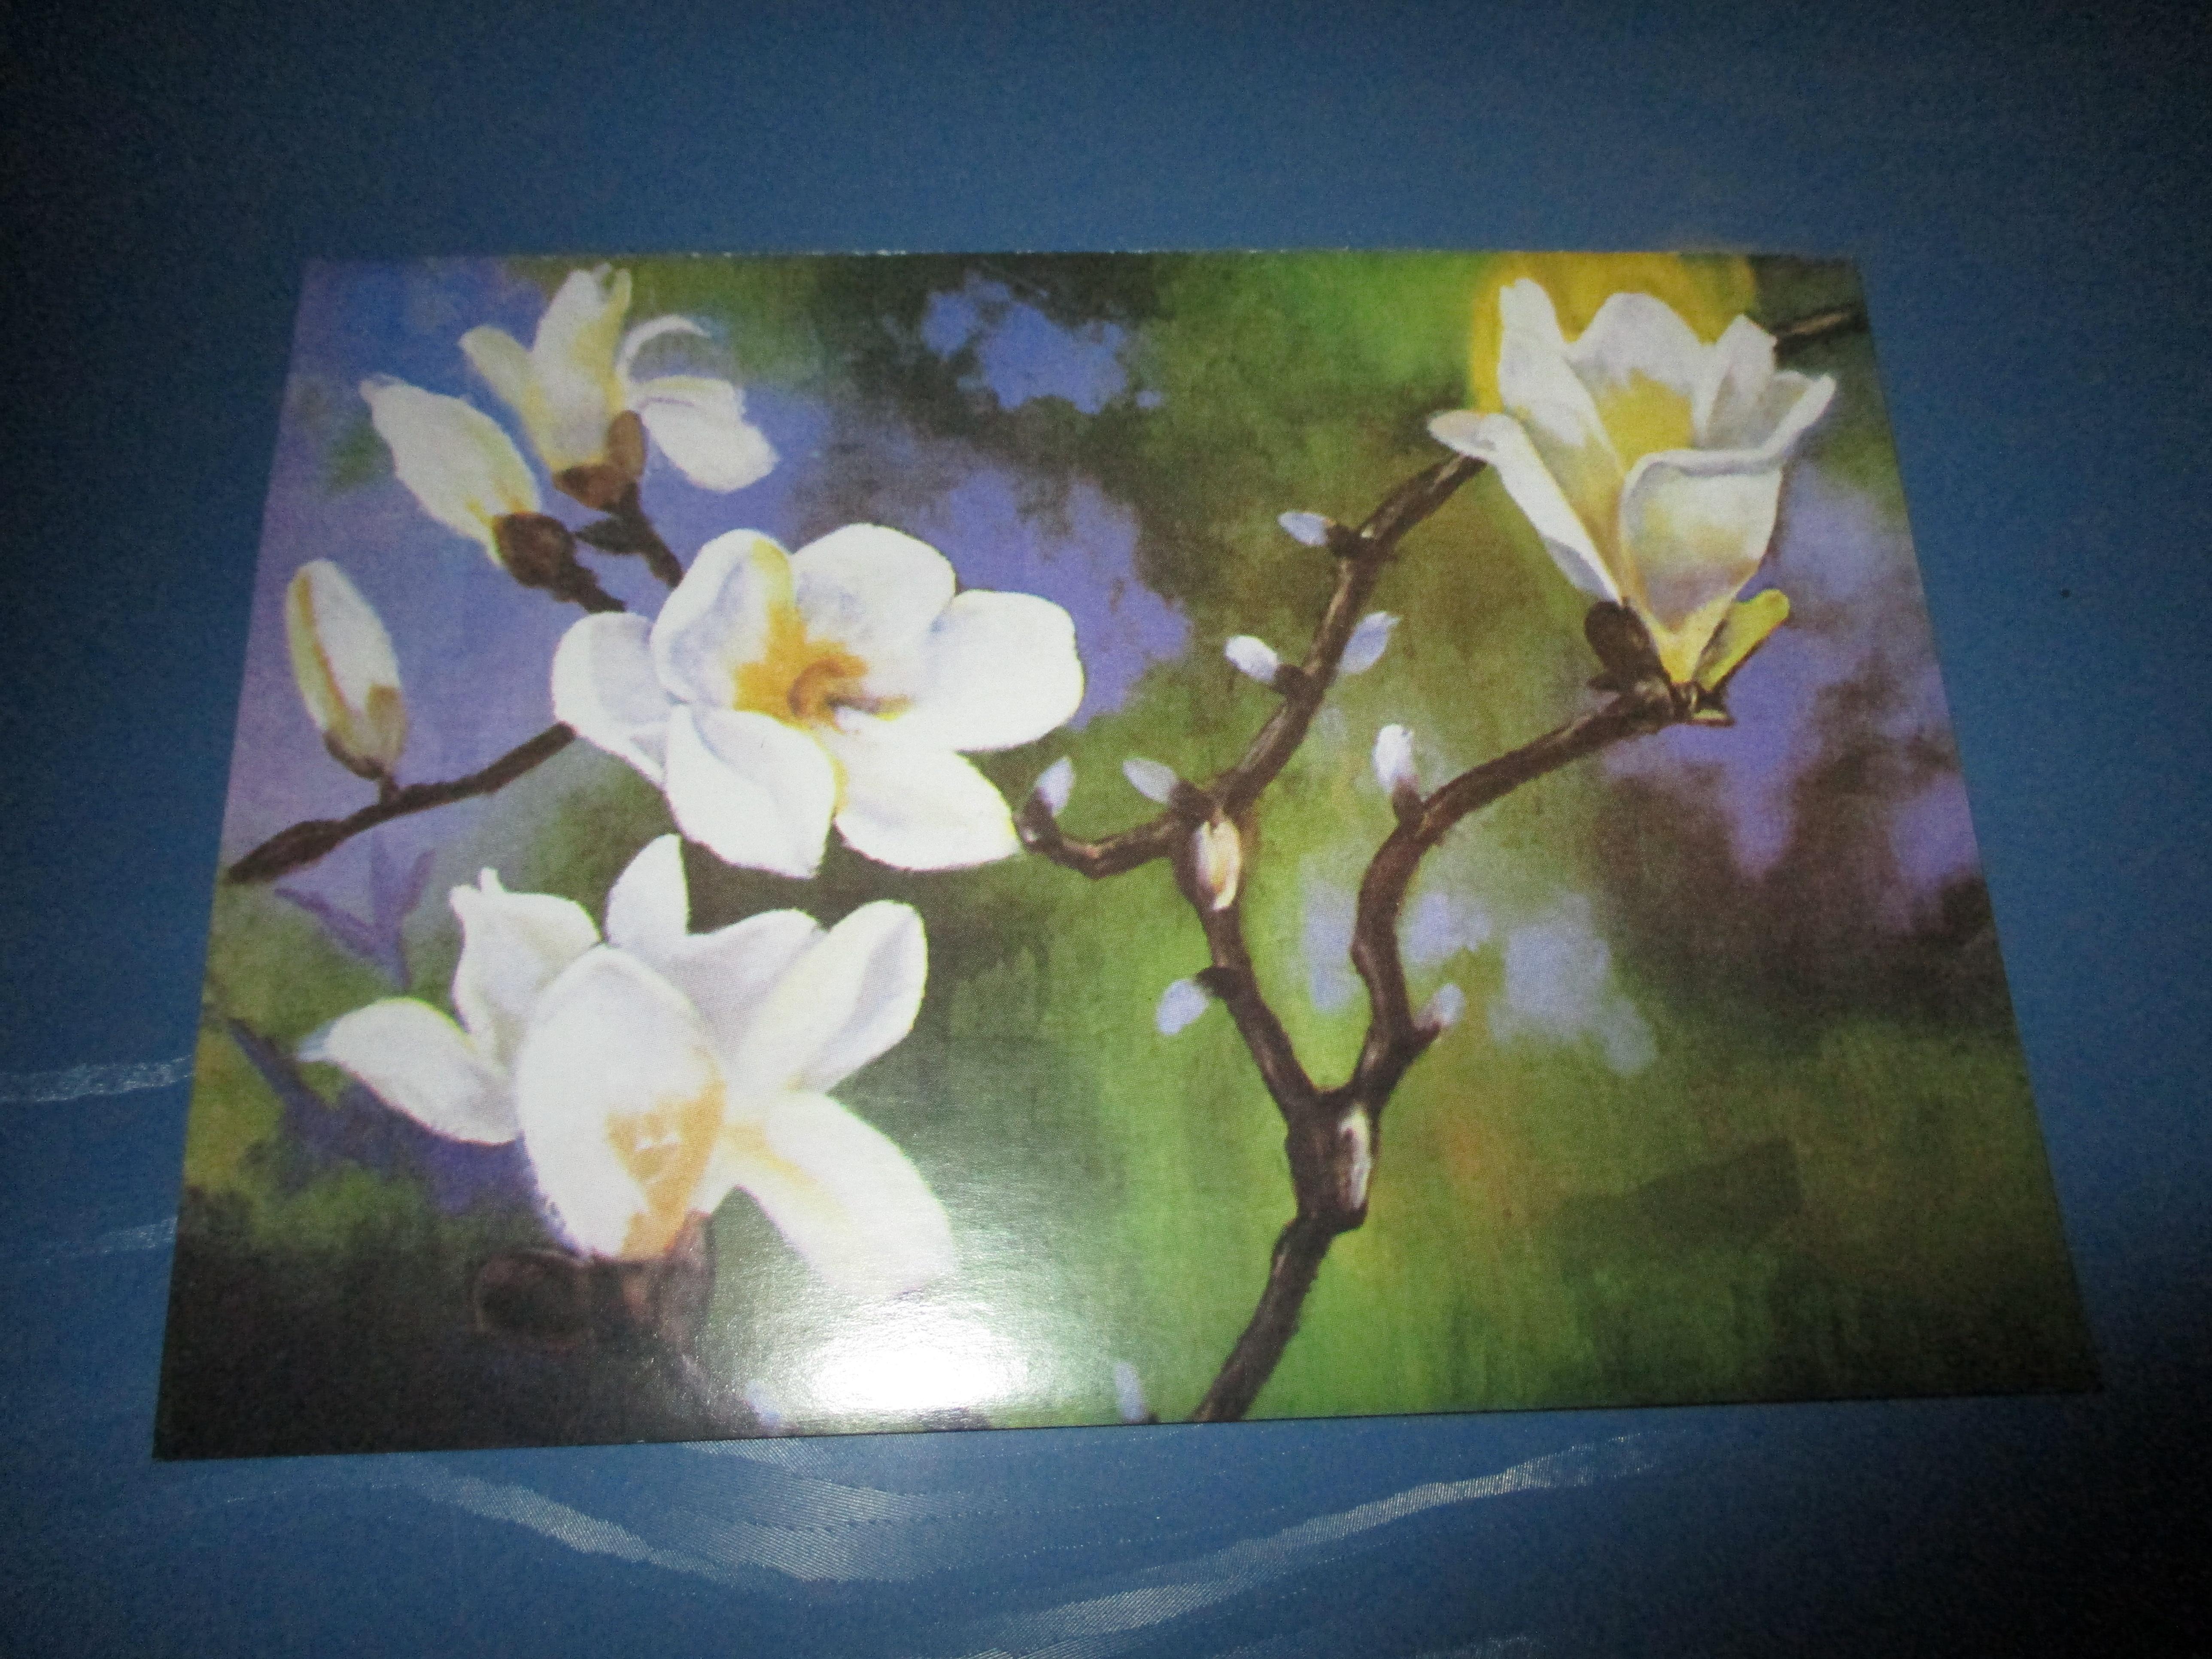 troc de troc carte double magnolia neuve image 0